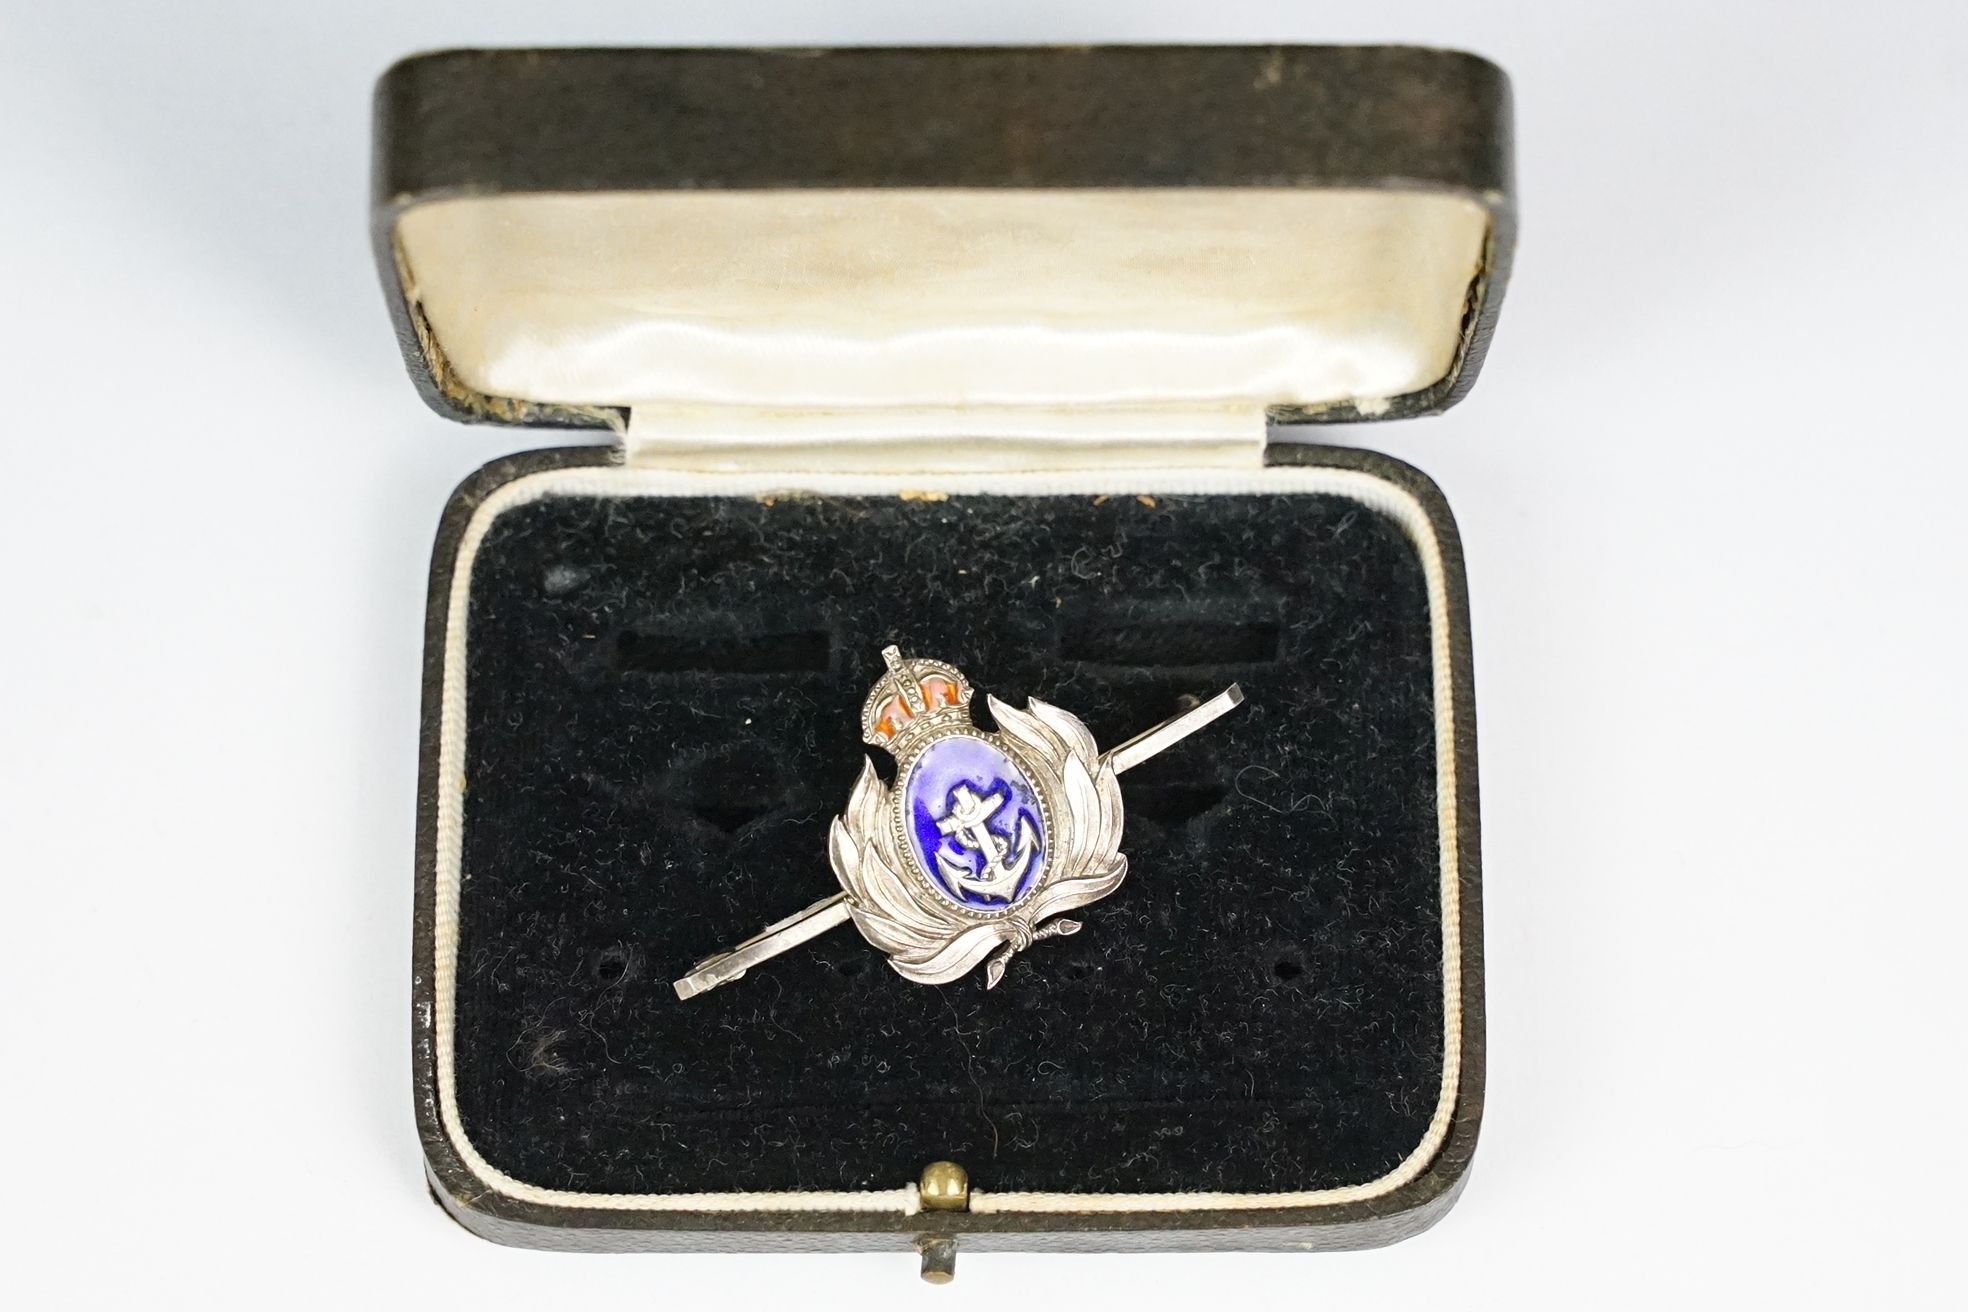 WW2 sterling silver and enamel naval sweetheart brooch